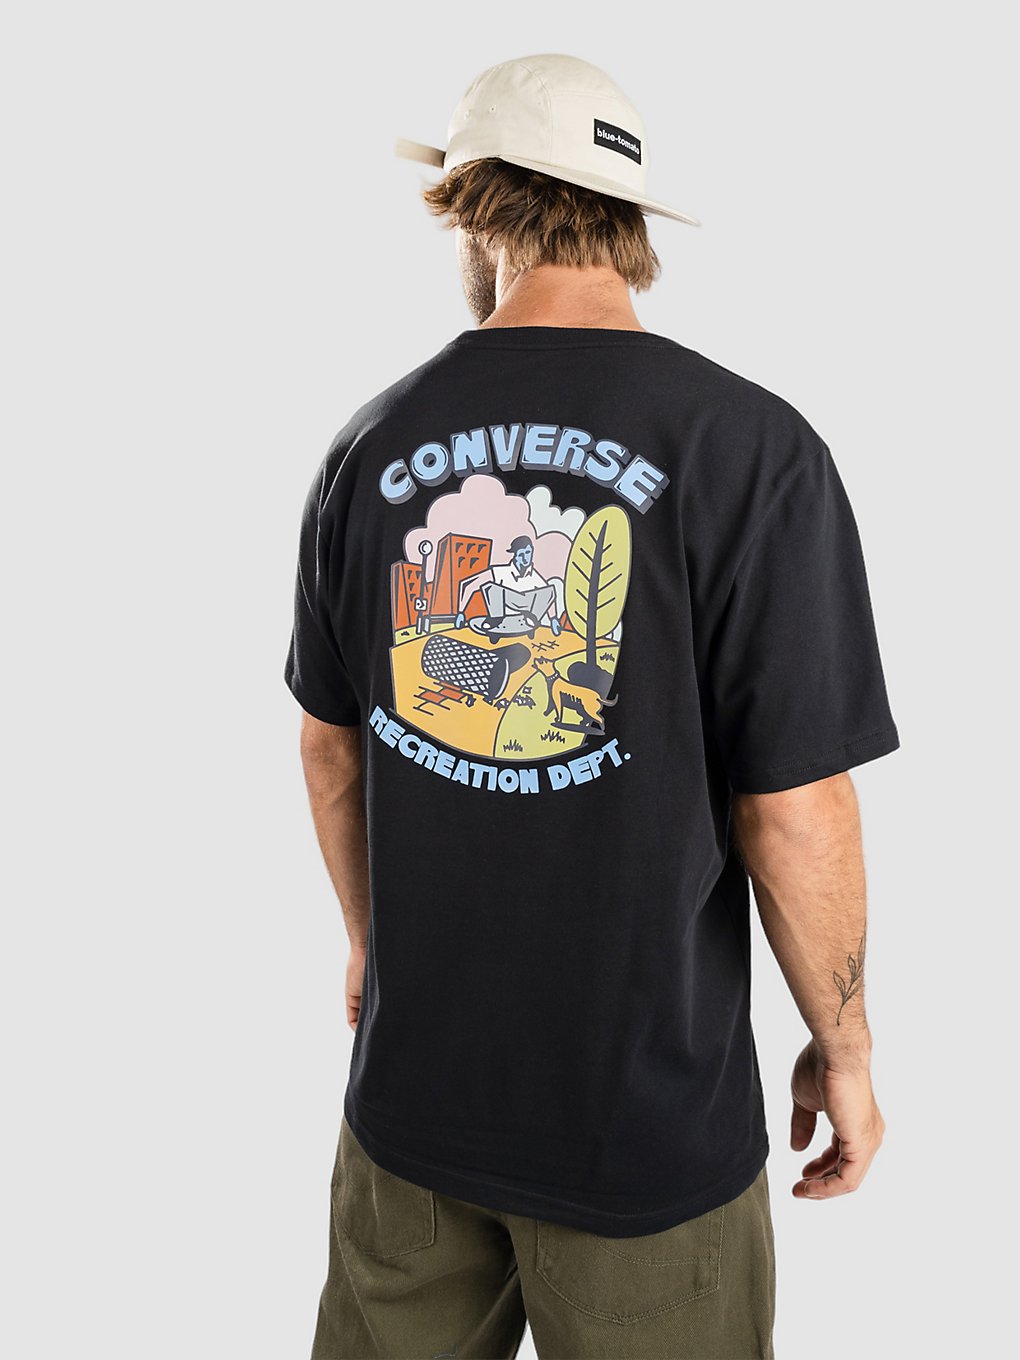 converse recreation department graphic t-shirt converse black